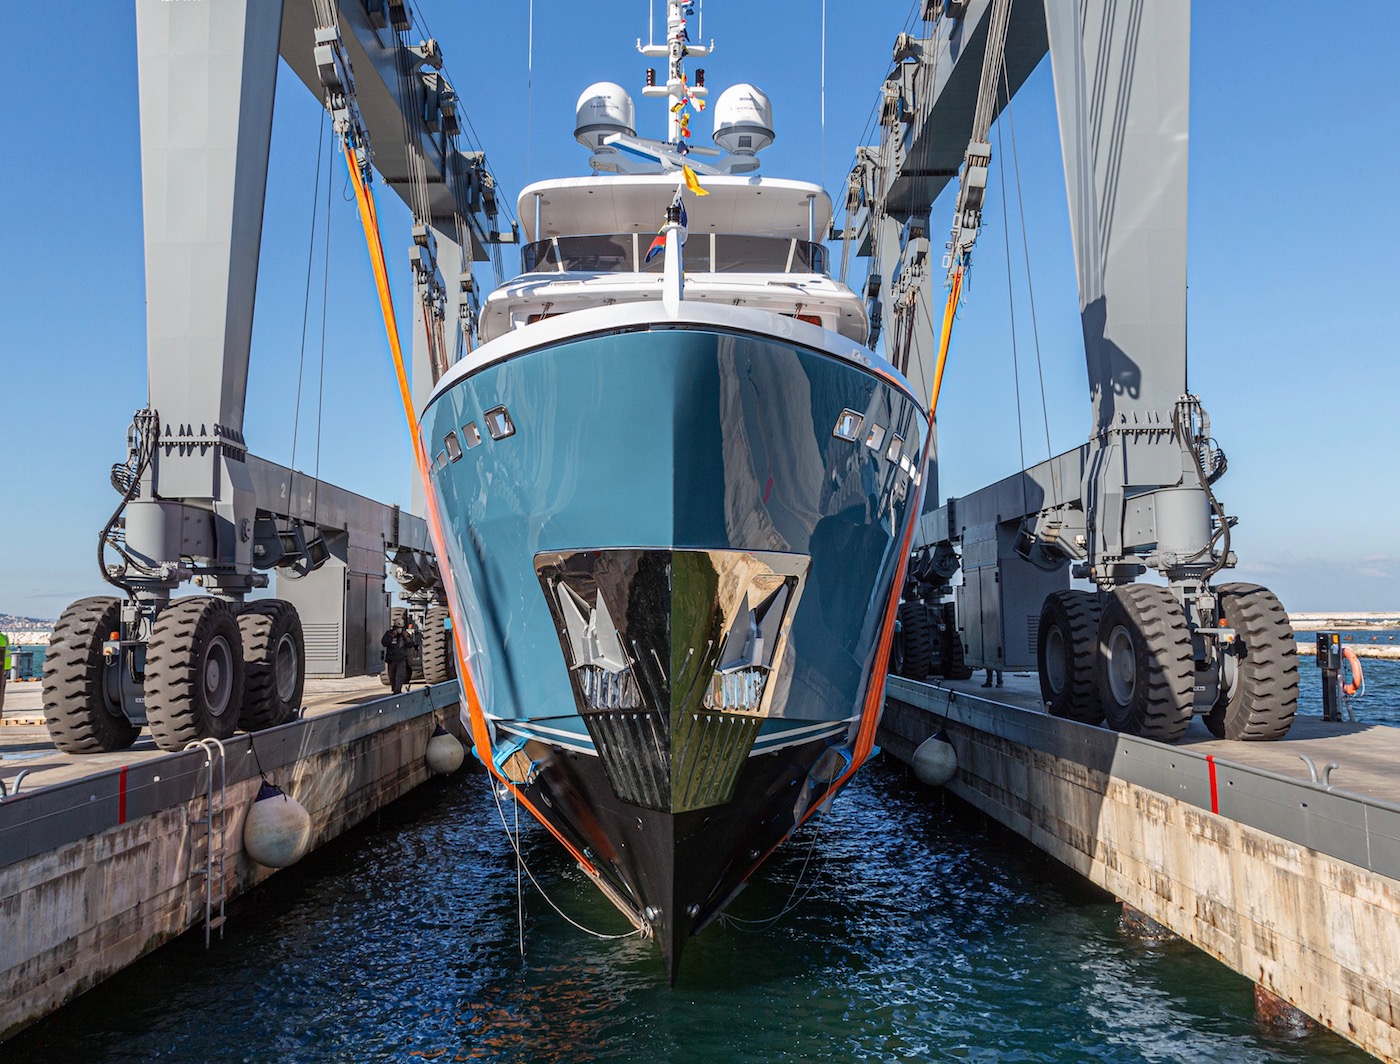 Darwin 106 motor yacht UPTIGHT launched